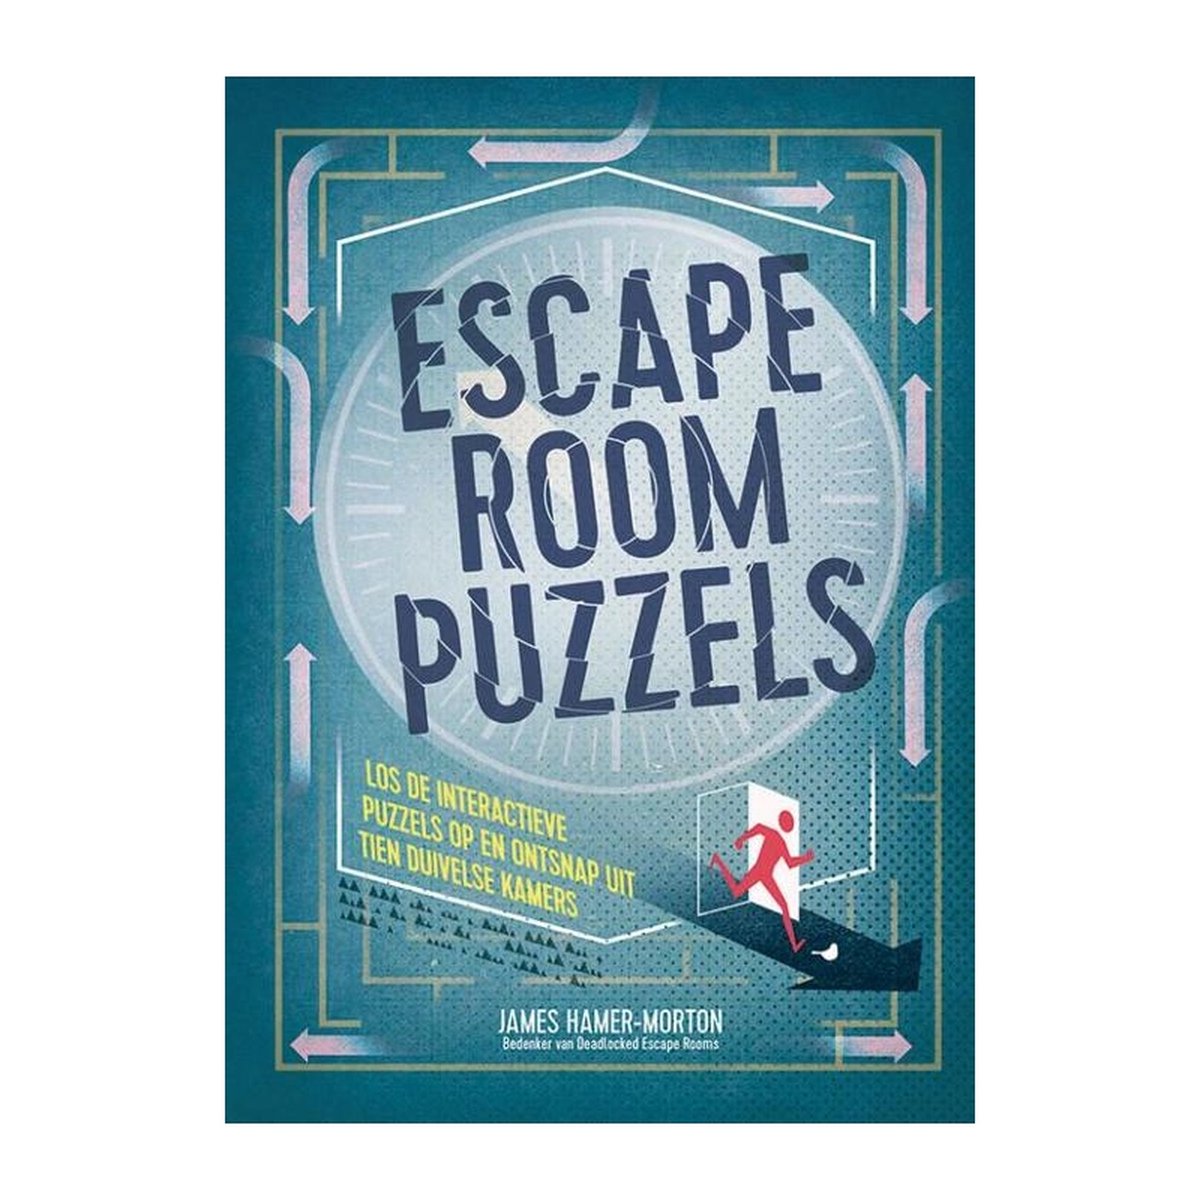 Escape room puzzels, James Hamer-Morton | 9789045325903 | Boeken | bol.com